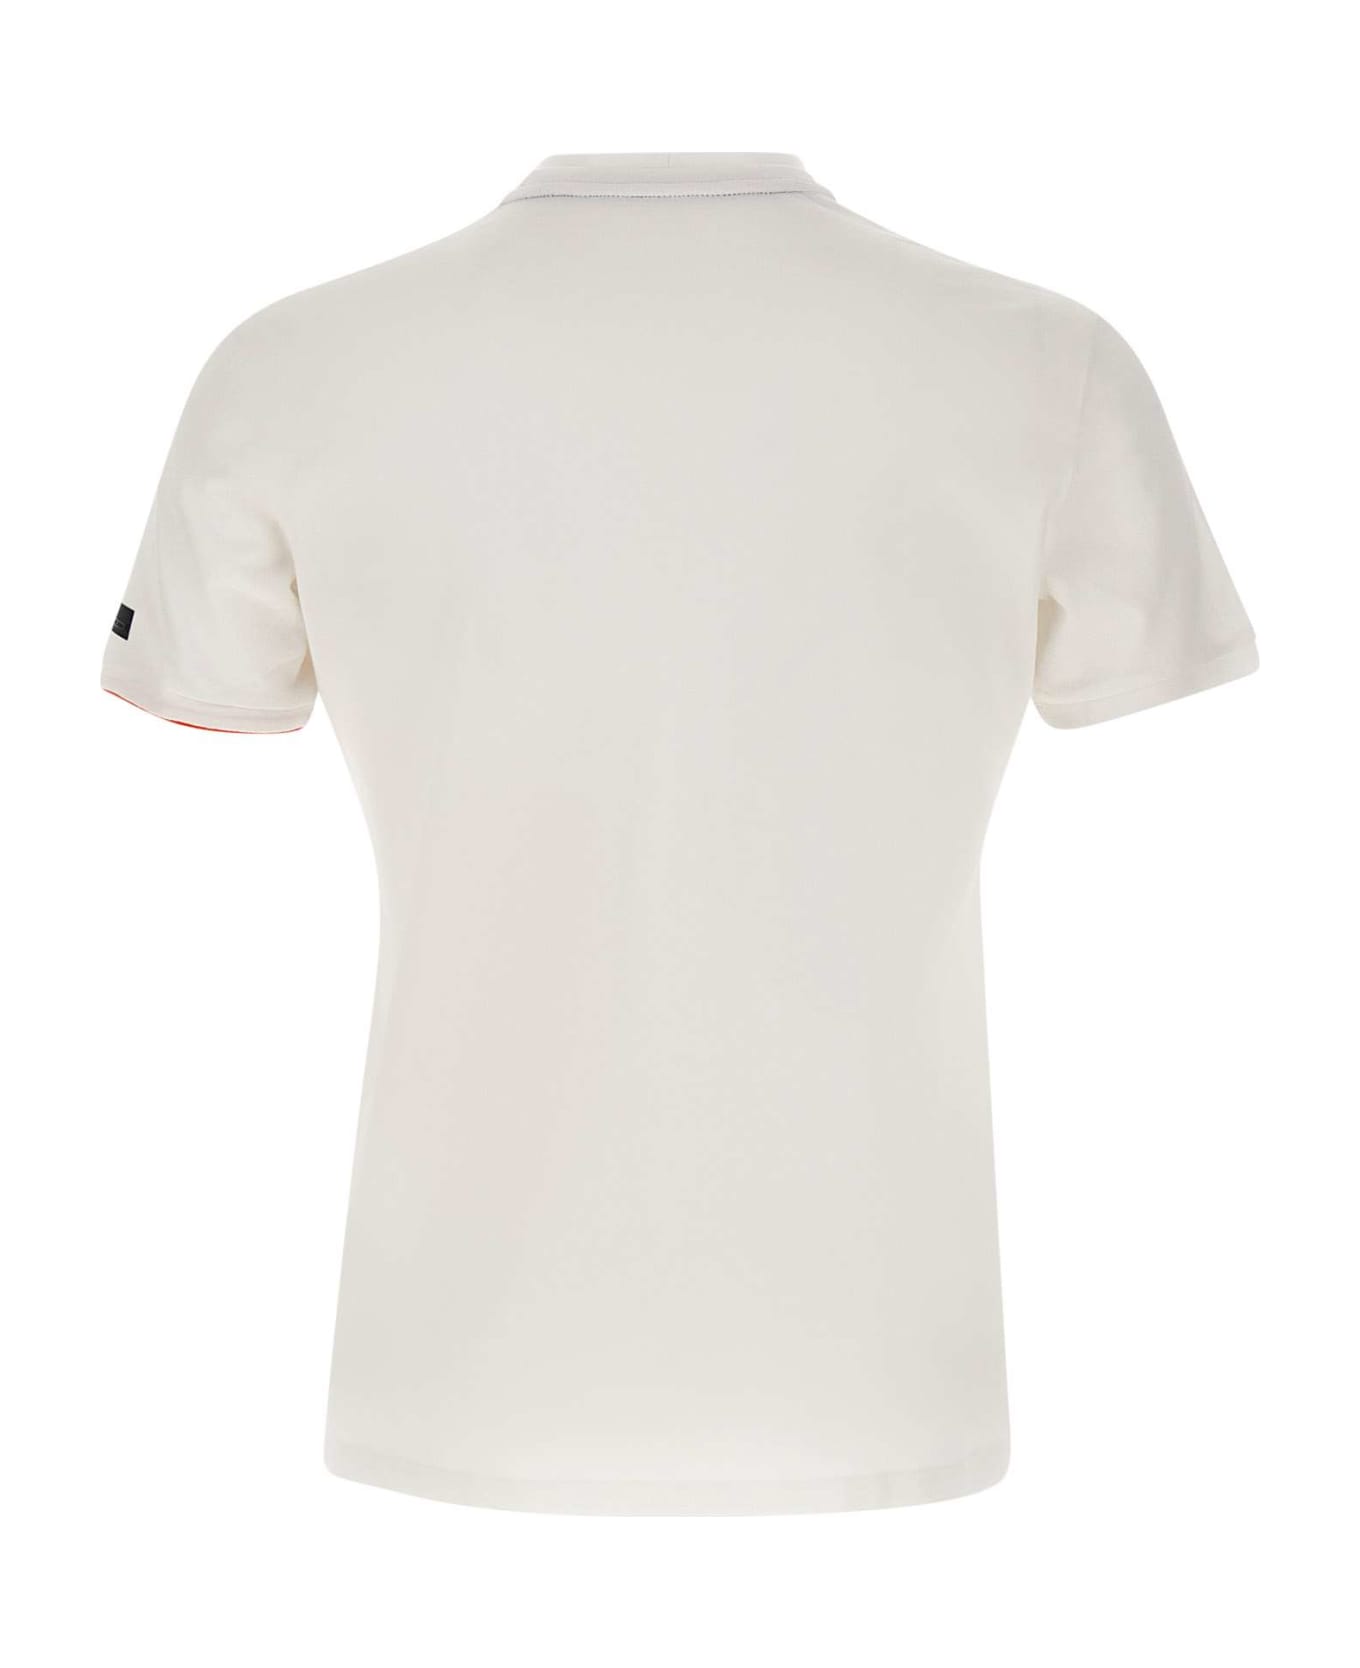 RRD - Roberto Ricci Design T-shirt 'shirty Macro' - Bianco